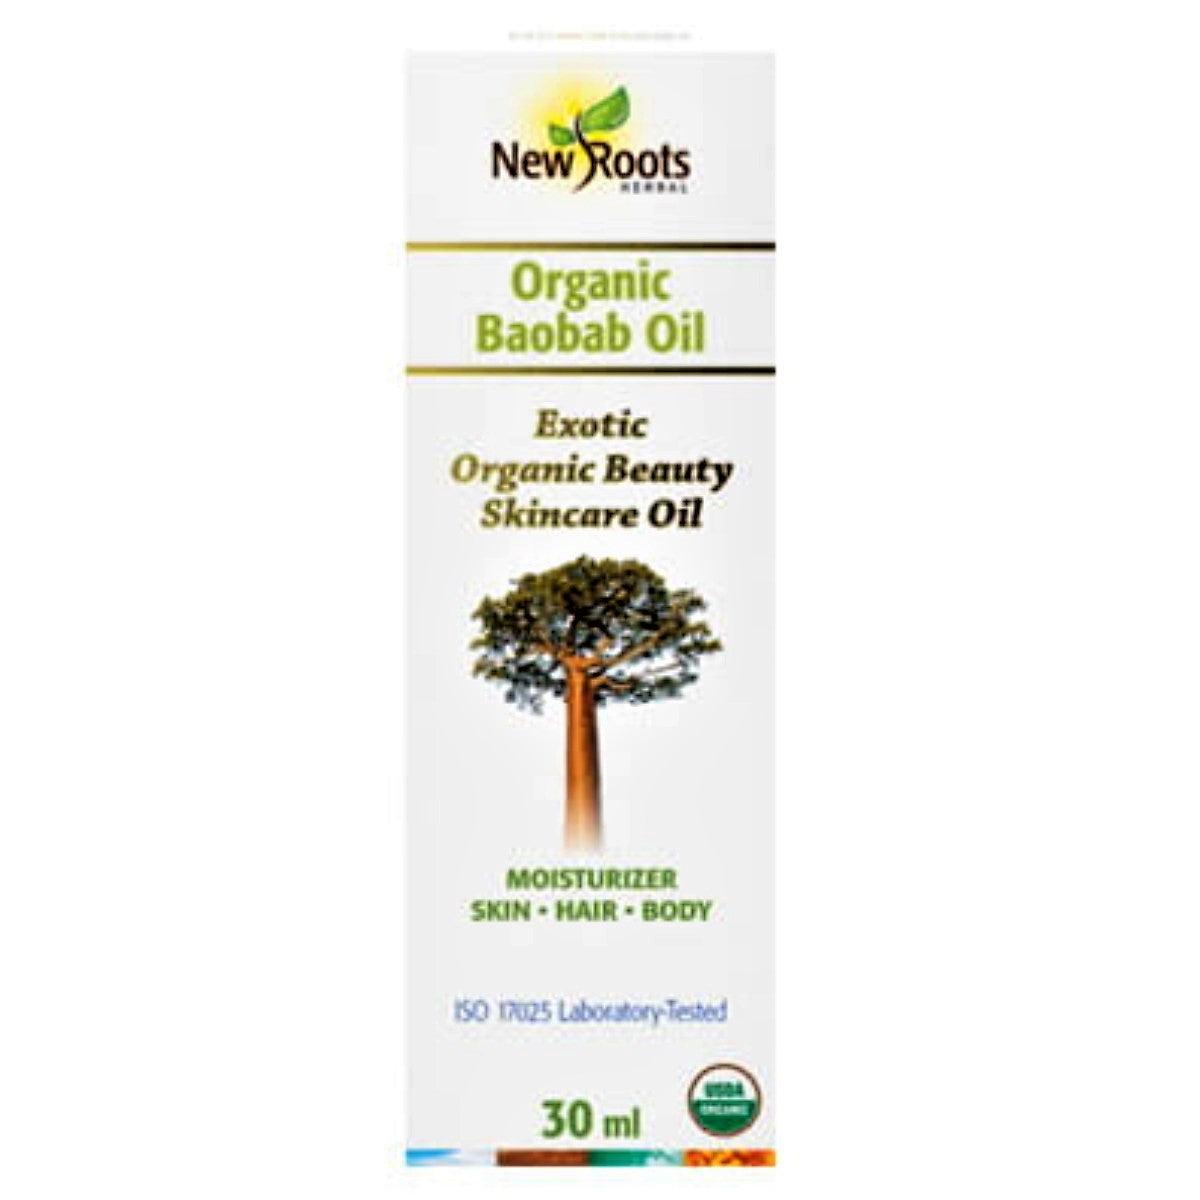 New Roots Organic Baobab Oil 30ml Beauty Oils at Village Vitamin Store